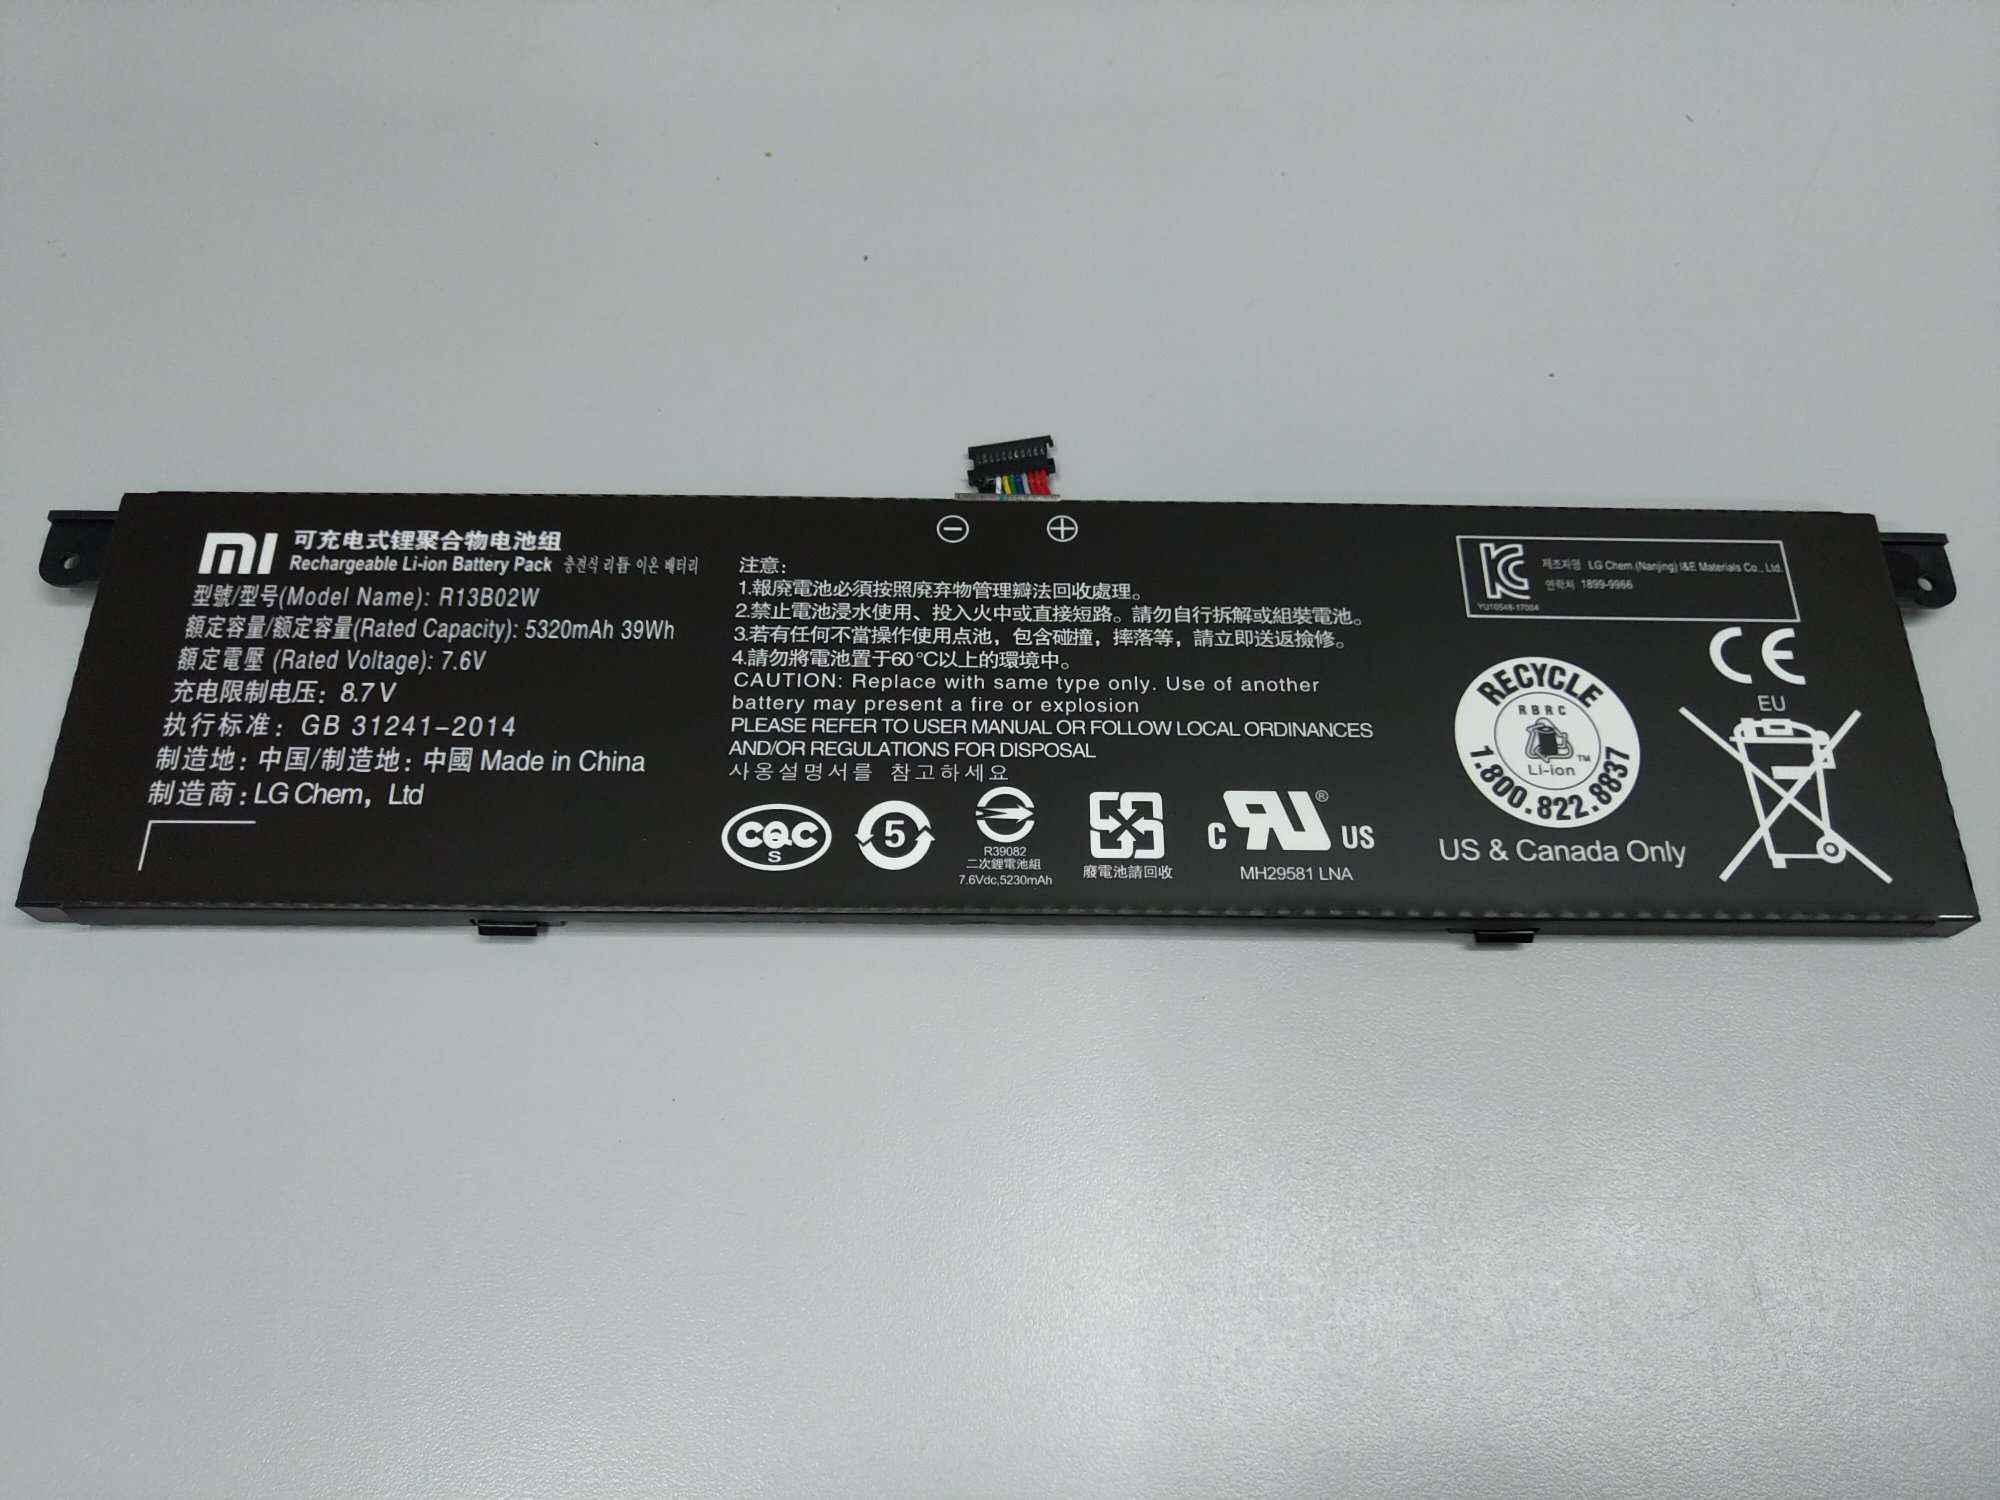 7.6V 39Wh 5107mAh/5320mAh Original R13B01W, R13B02W Laptop Battery compatible with Xiaomi Mi Air 13.3